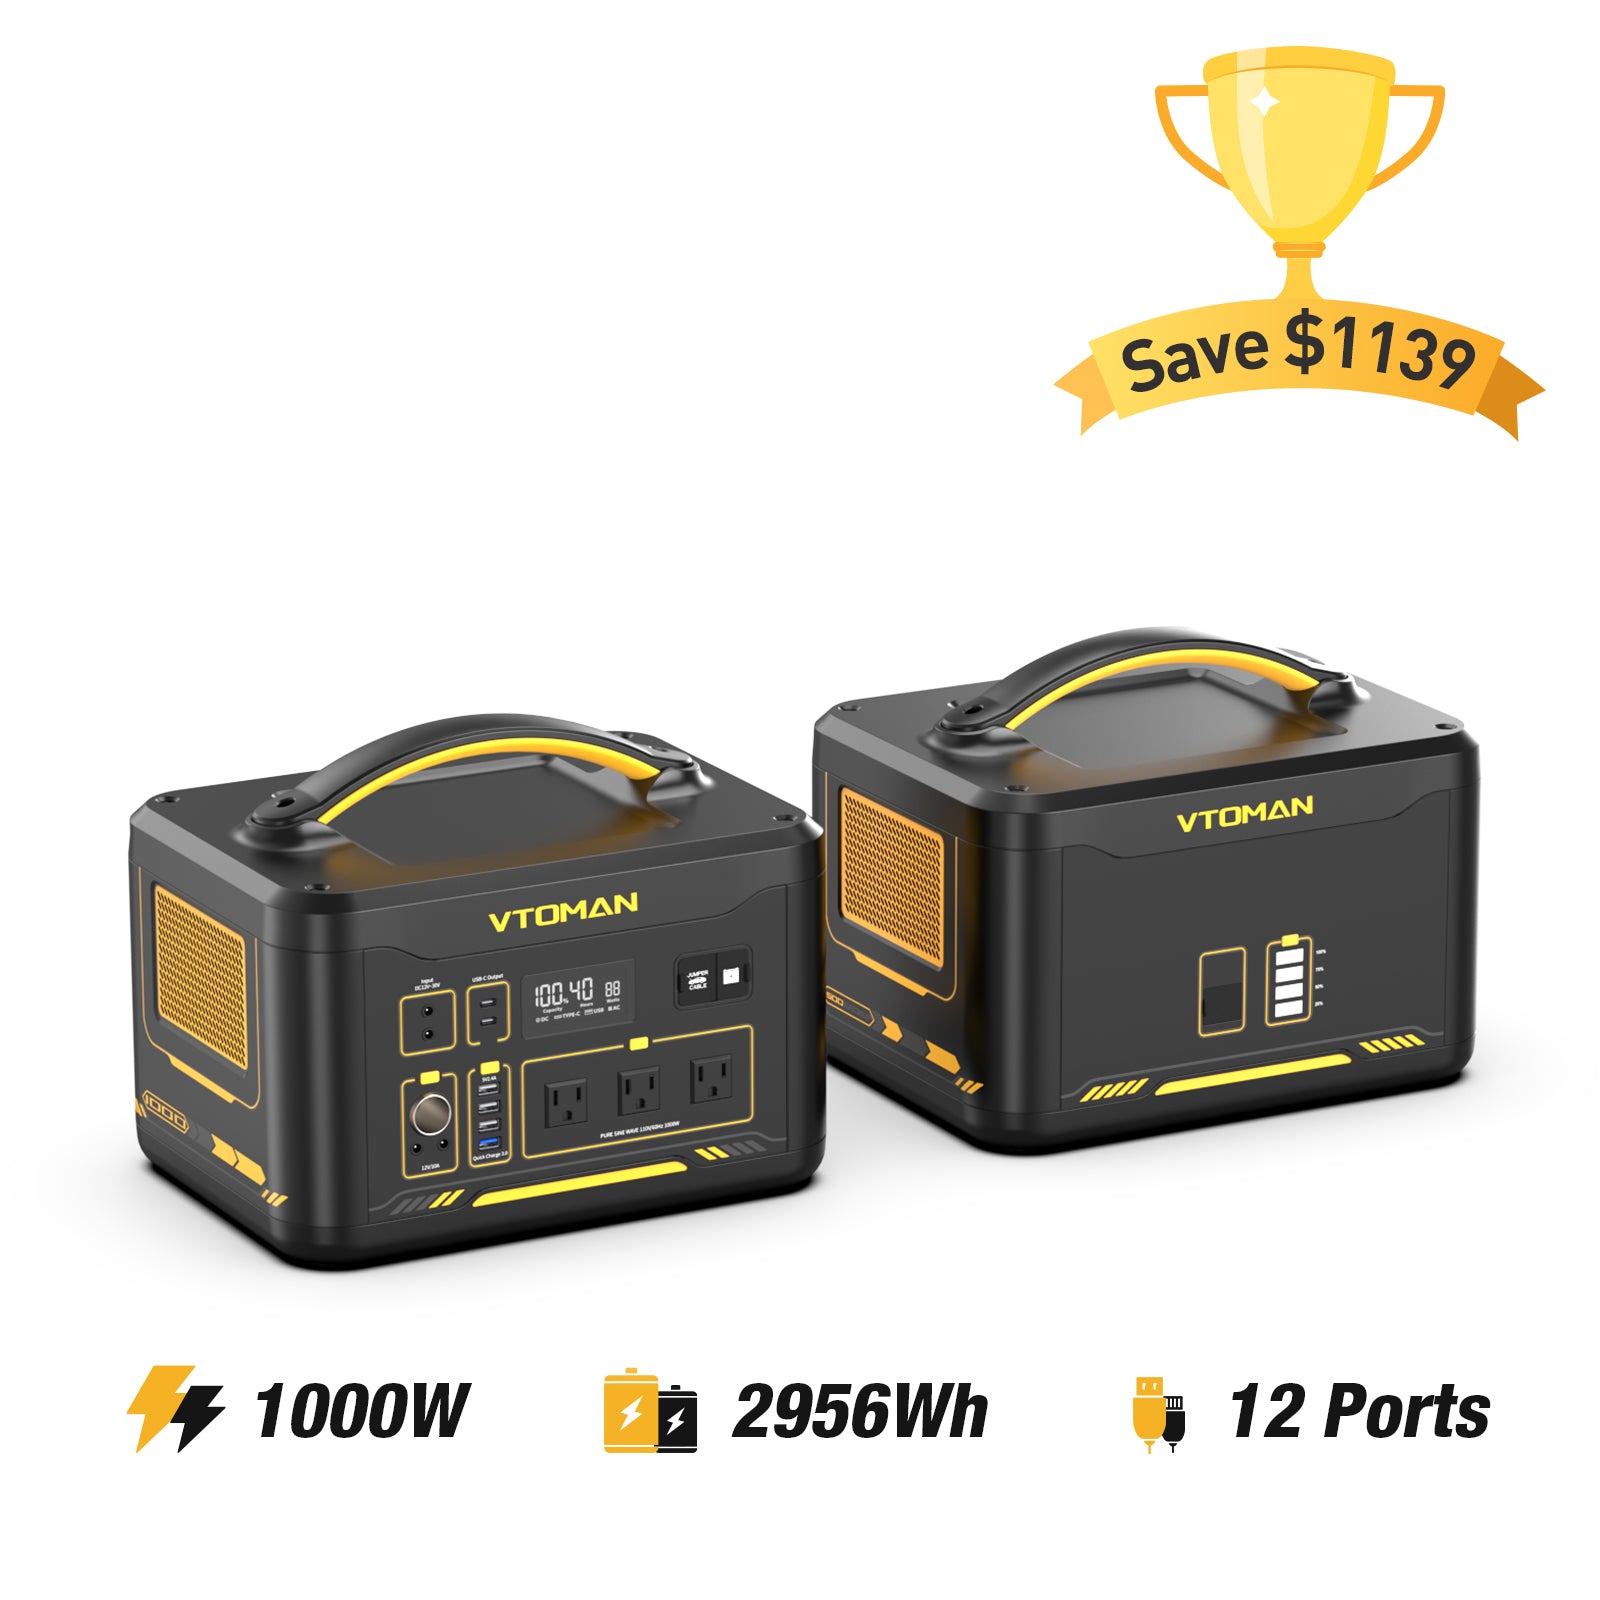 VTOMAN Jump 1548Wh Extra Battery